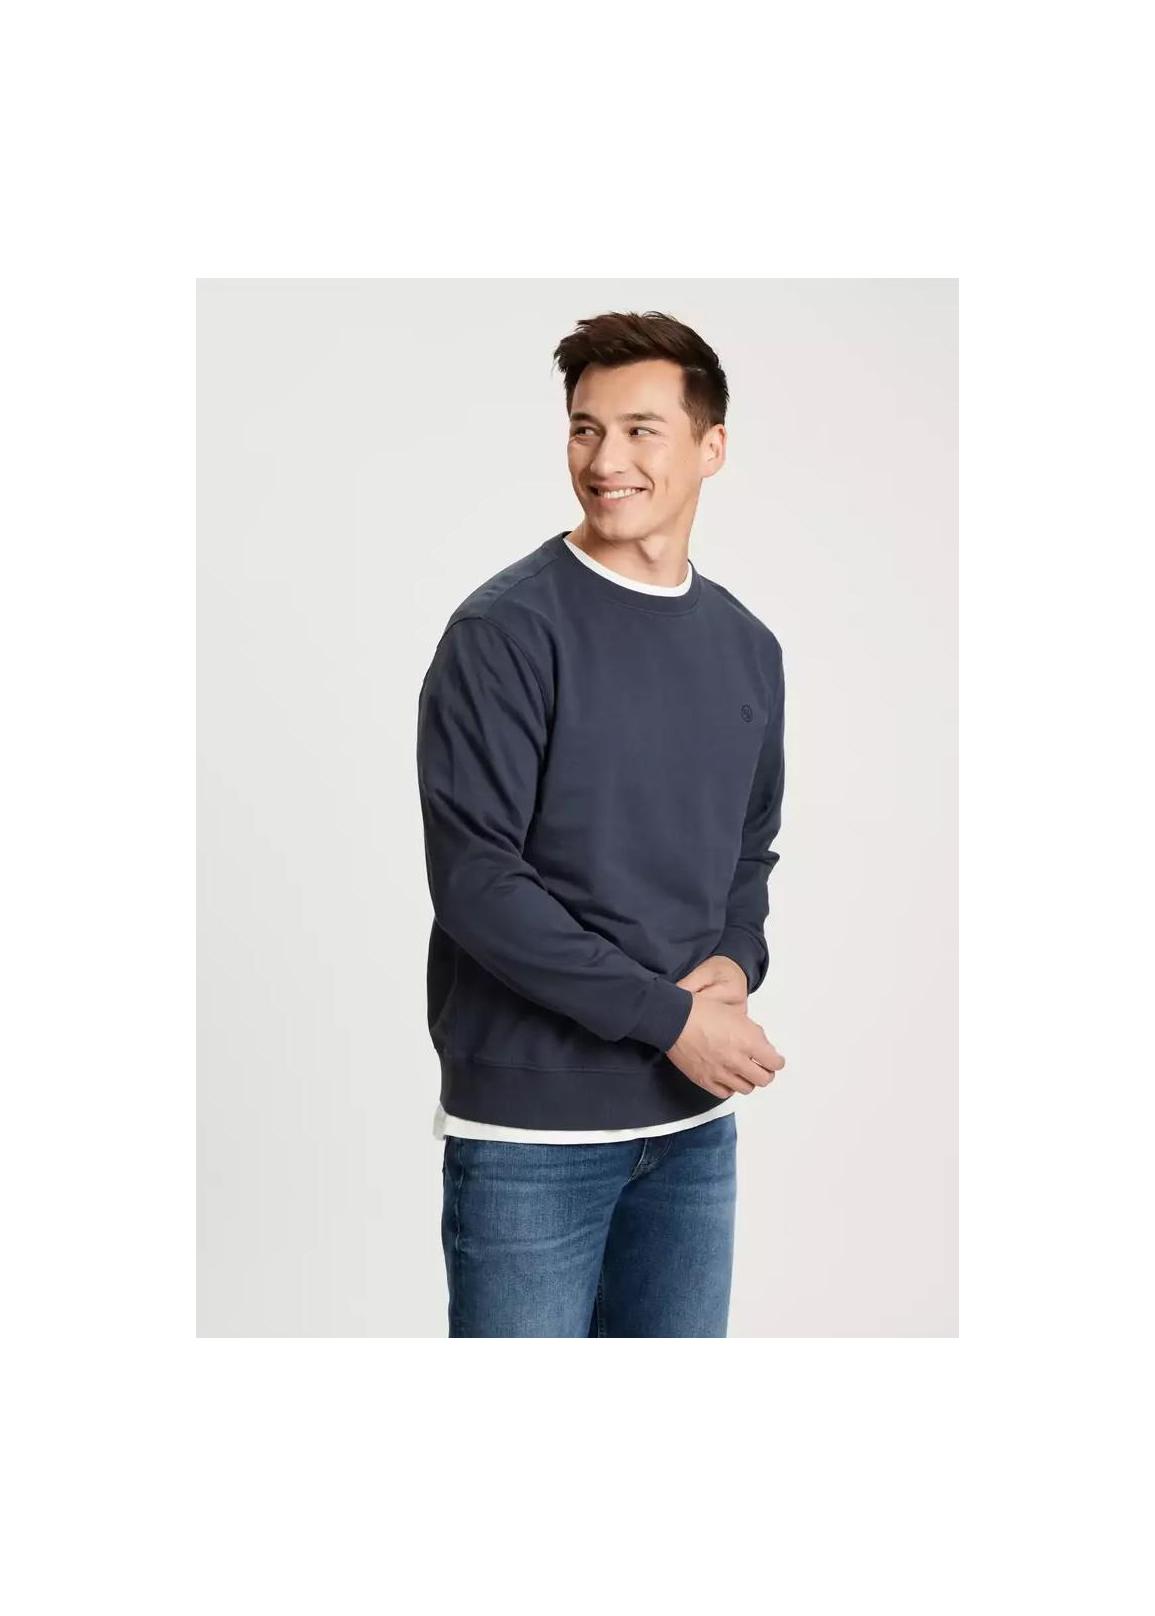 Cross Jeans® Sweater - Navy (001)